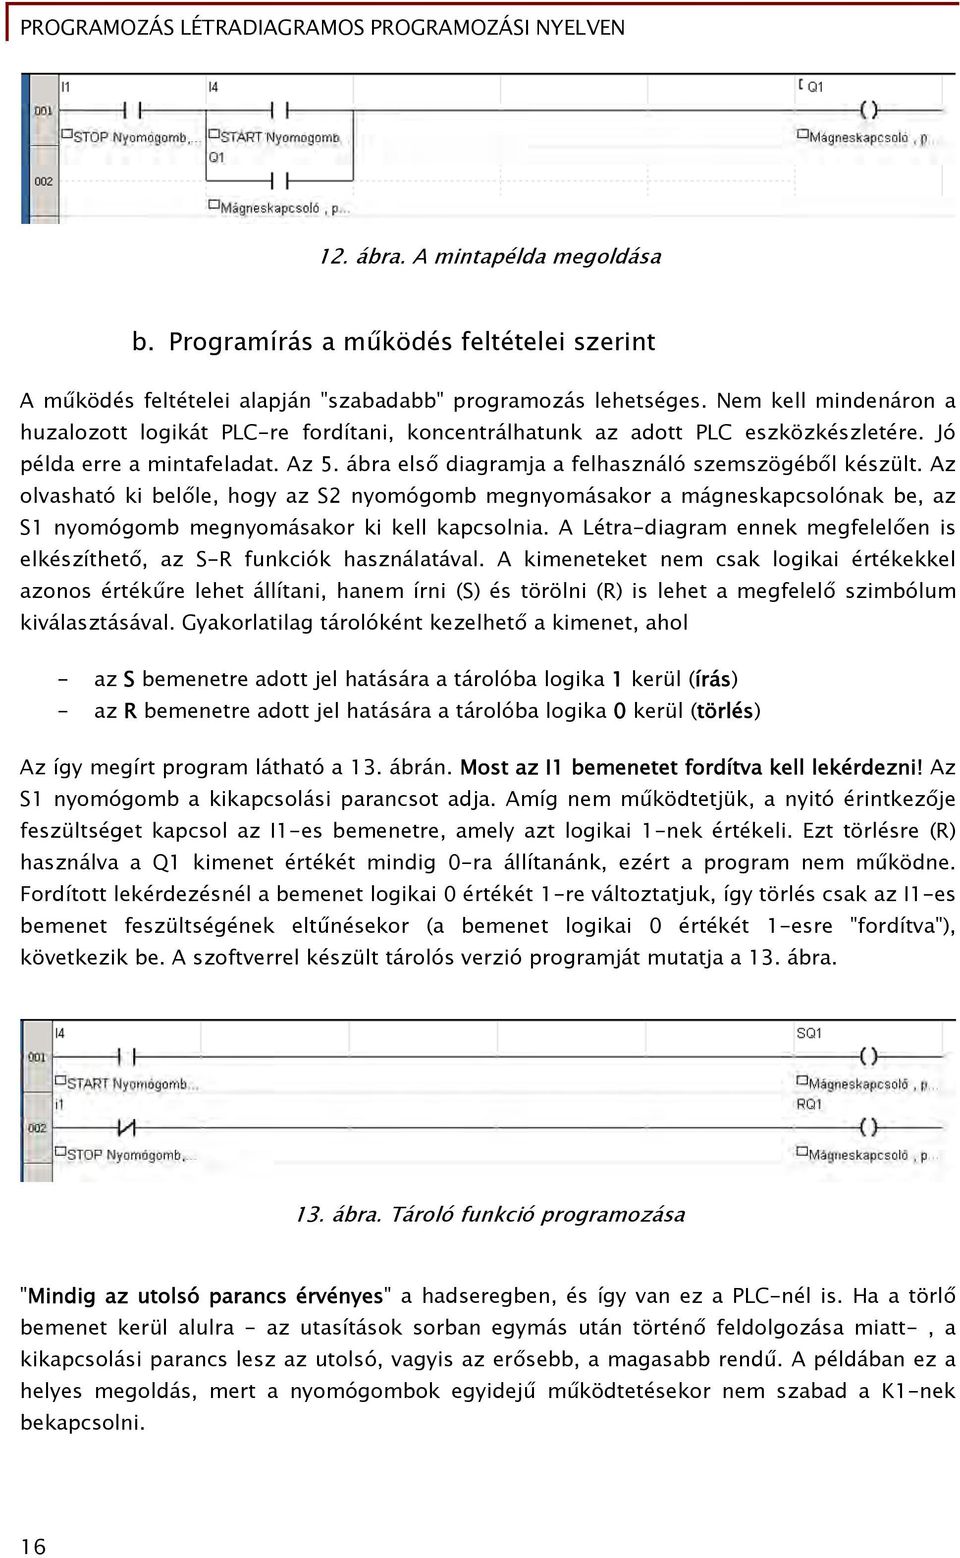 Programozás létradiagramos programozási nyelven - PDF Free Download